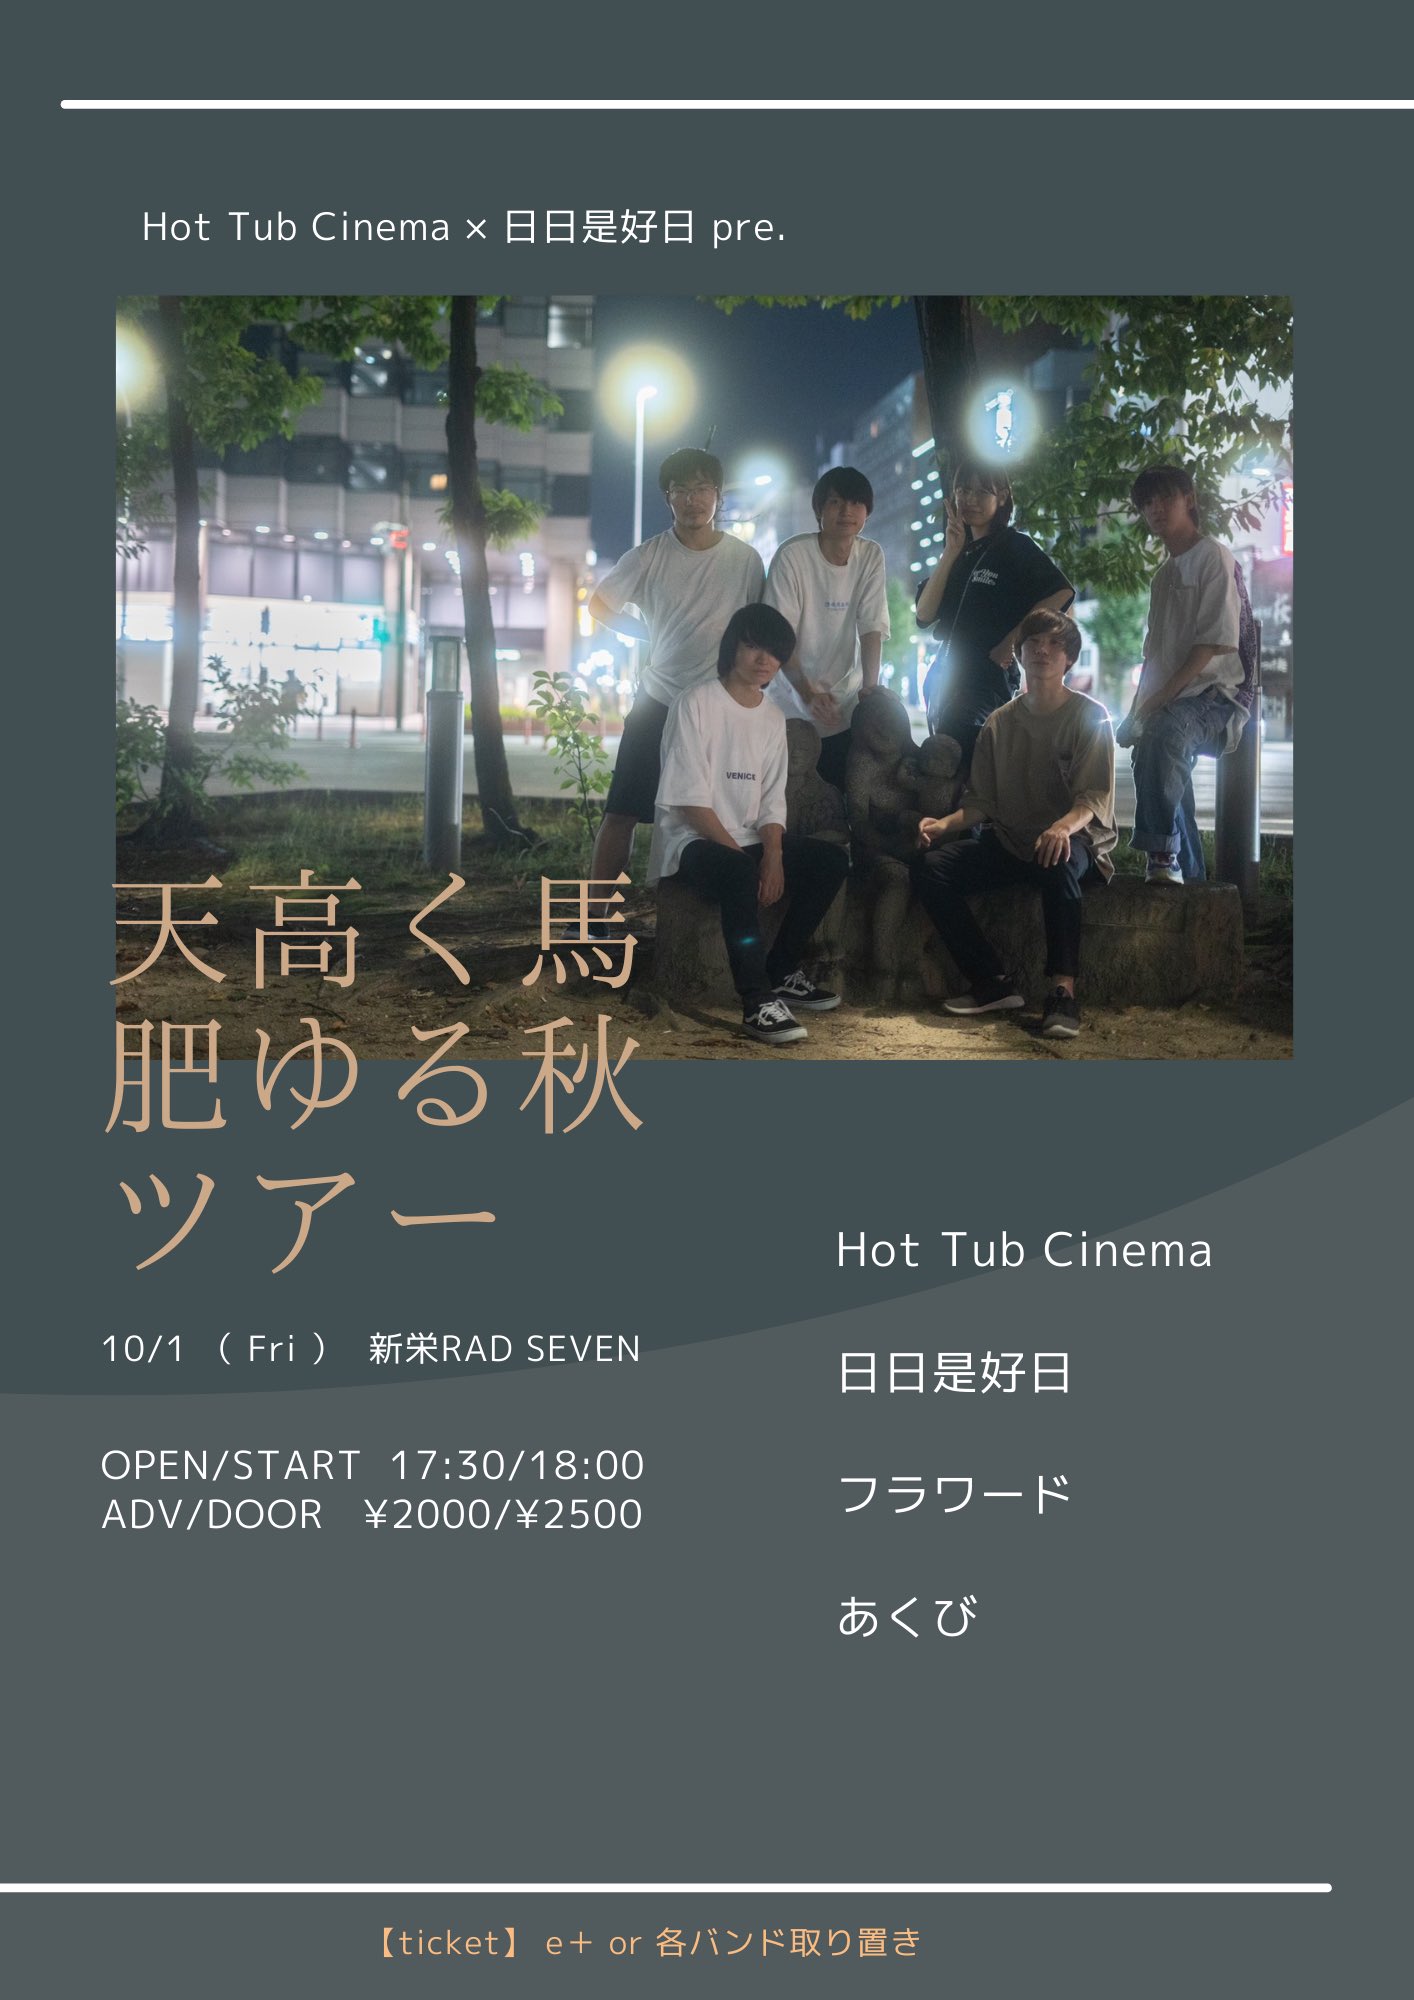 Hot Tub Cinema x フラワード pre "天高く馬肥ゆる秋ツアー"